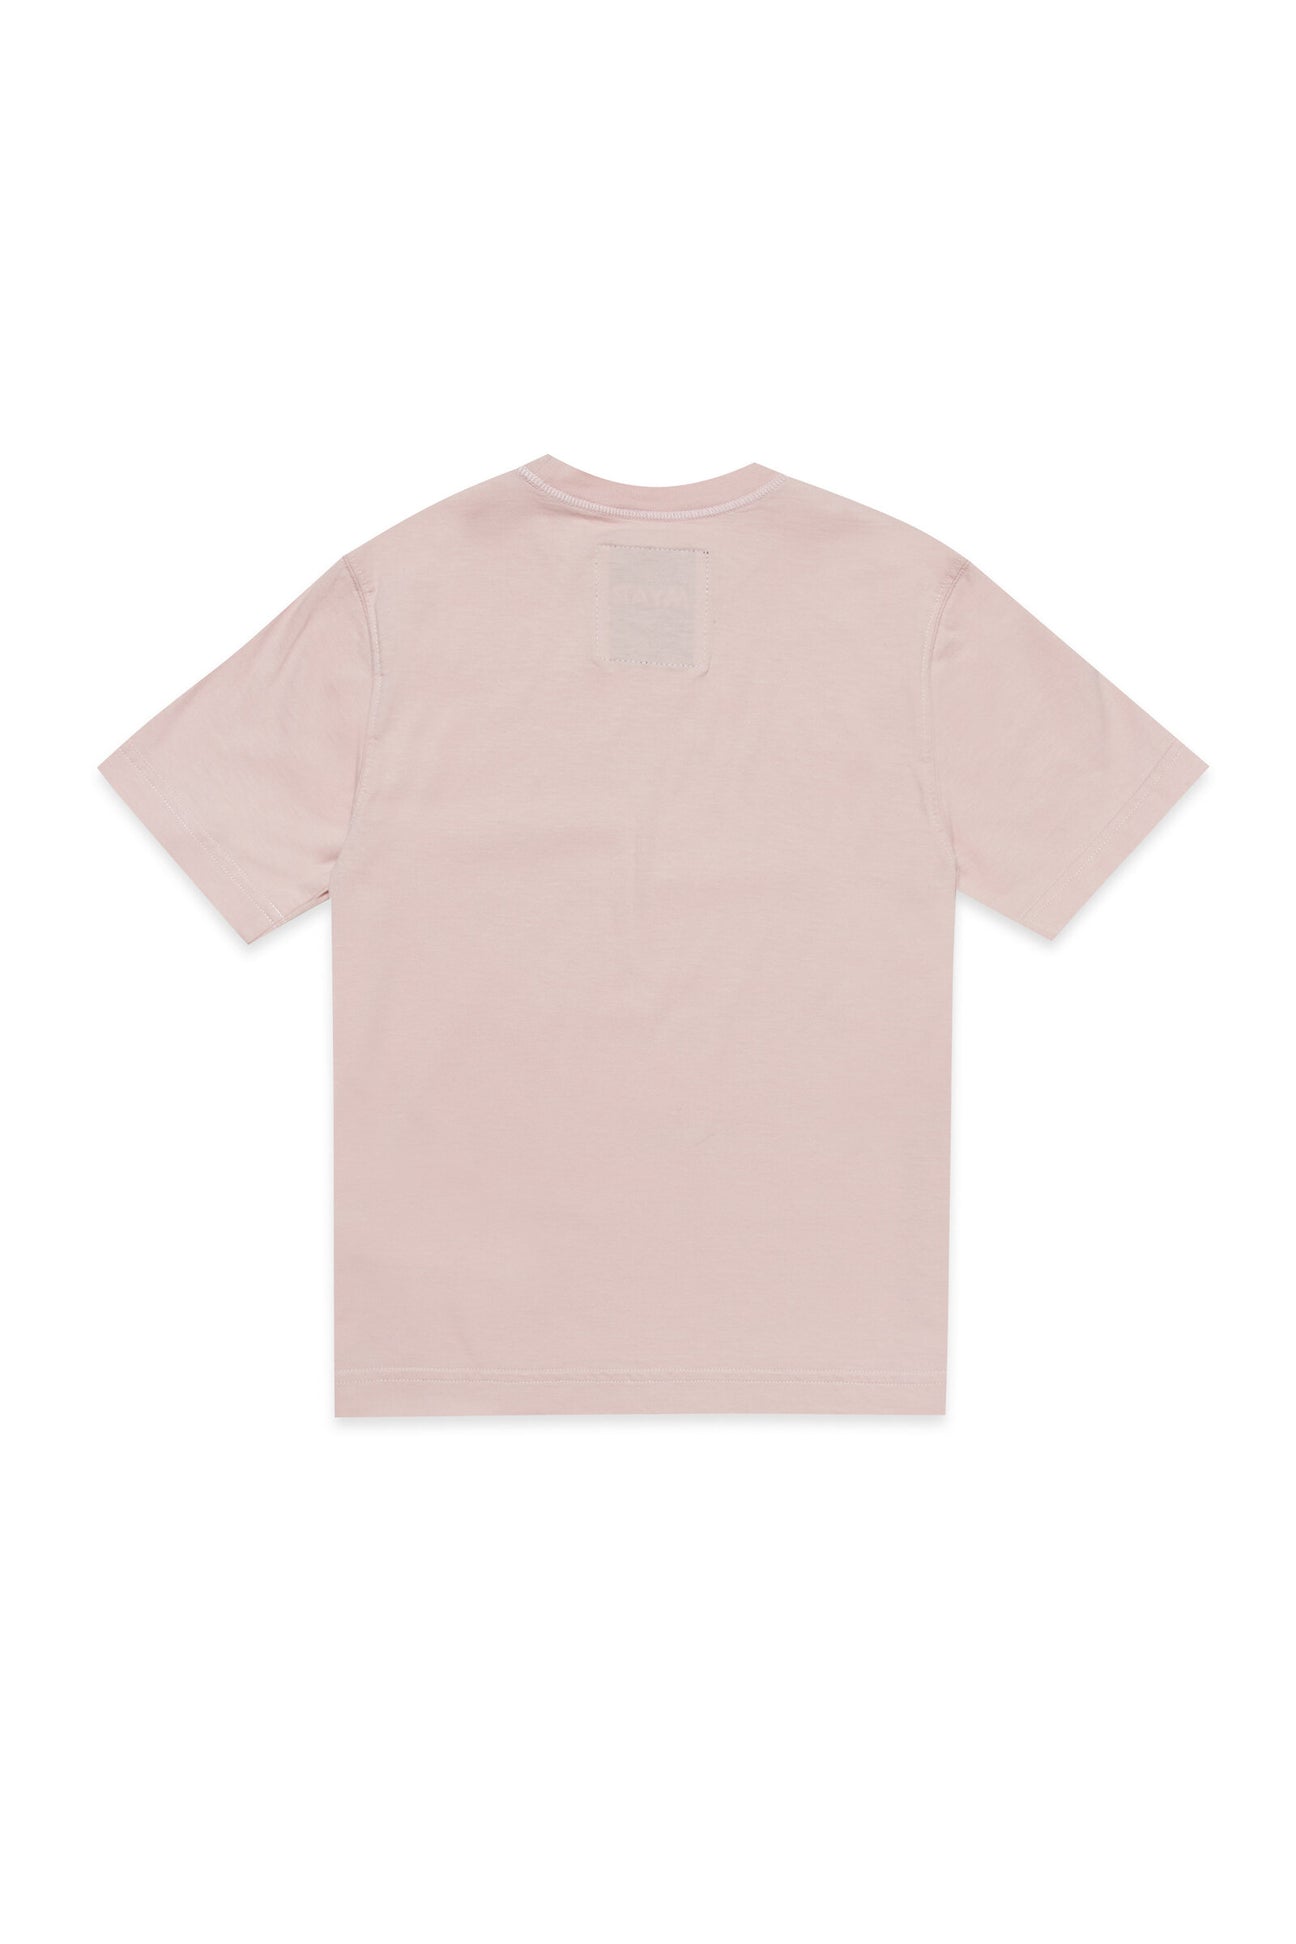 T-shirt girocollo in tessuto deadstock rosa con stampa digitale Sloowly T-shirt girocollo in tessuto deadstock rosa con stampa digitale Sloowly